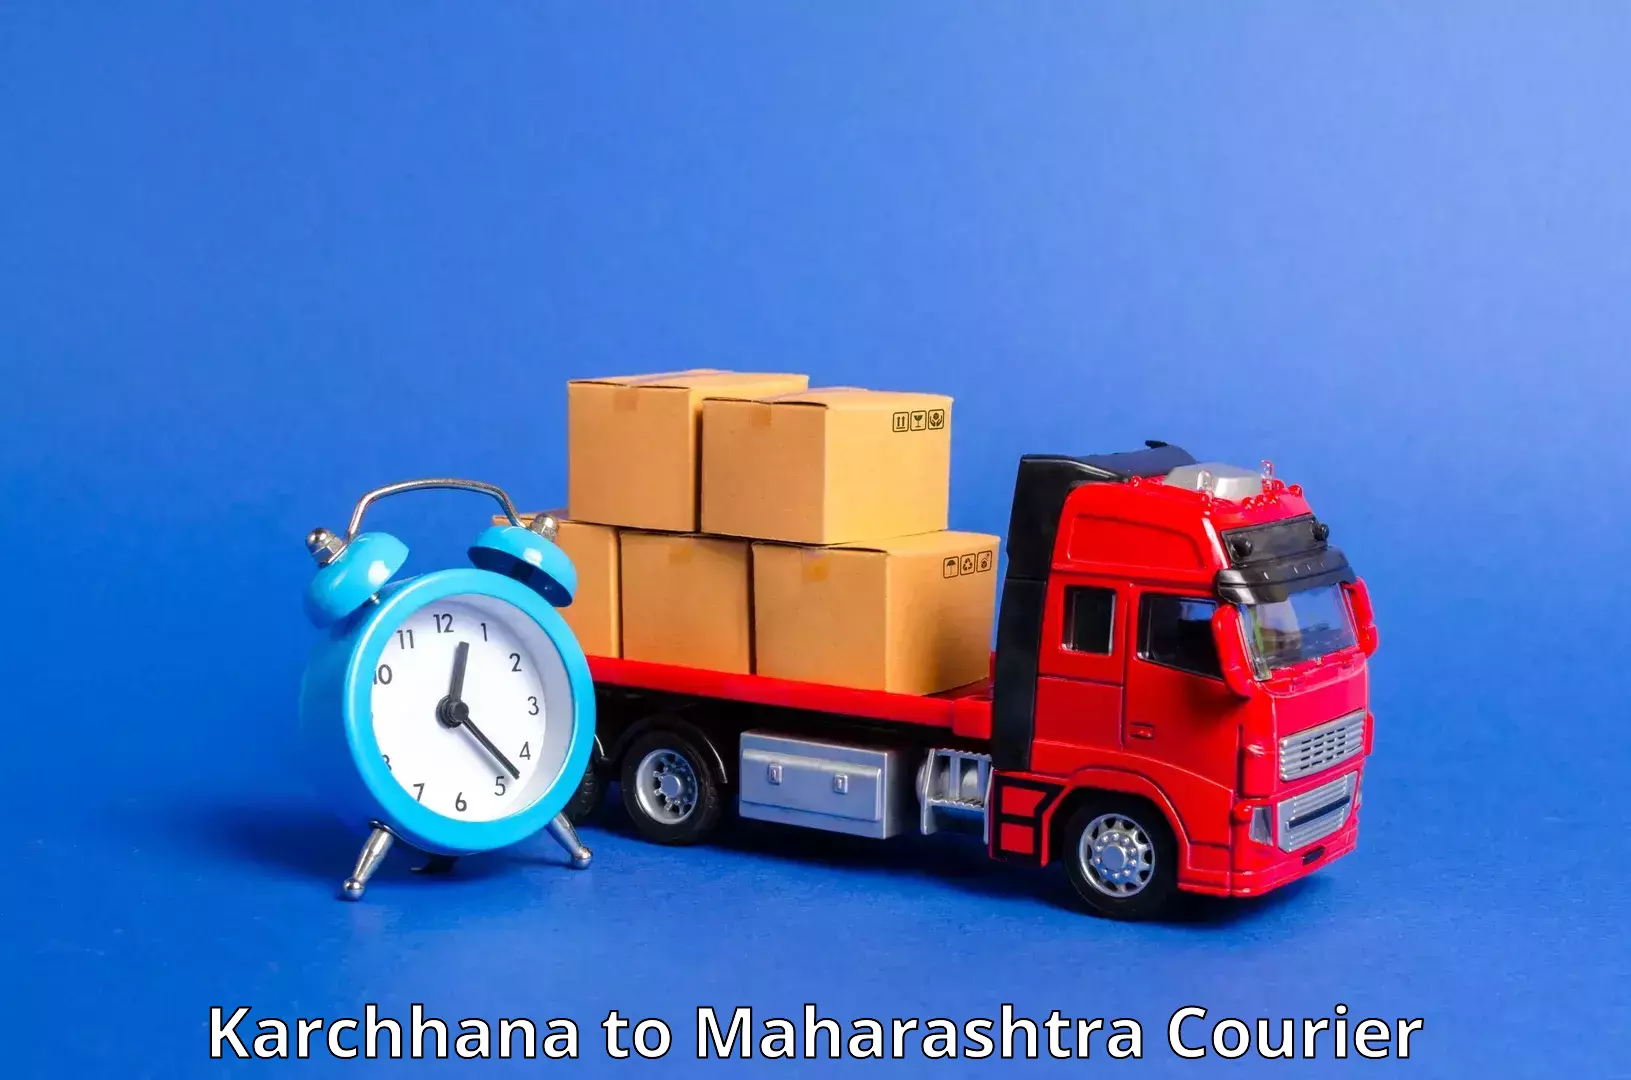 24-hour courier service in Karchhana to Karmala